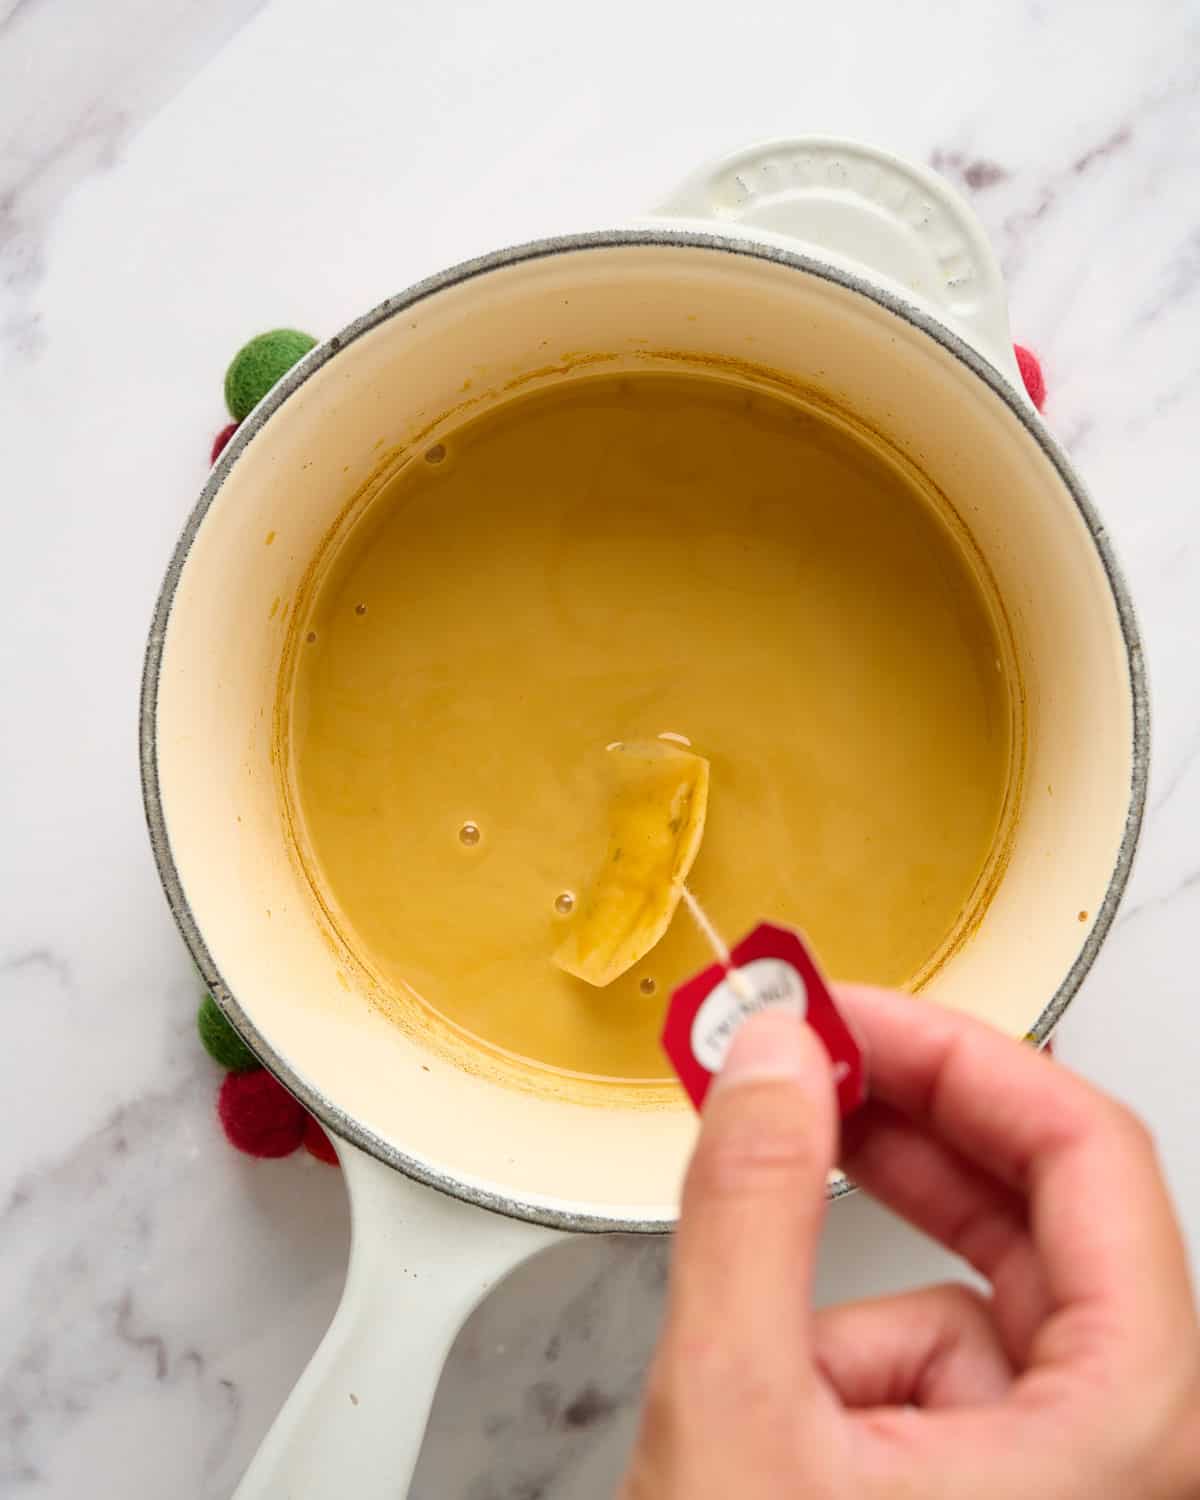 The process of adding a tea bag into a pumpkin-oat milk mixture to make a pumpkin chai latte.